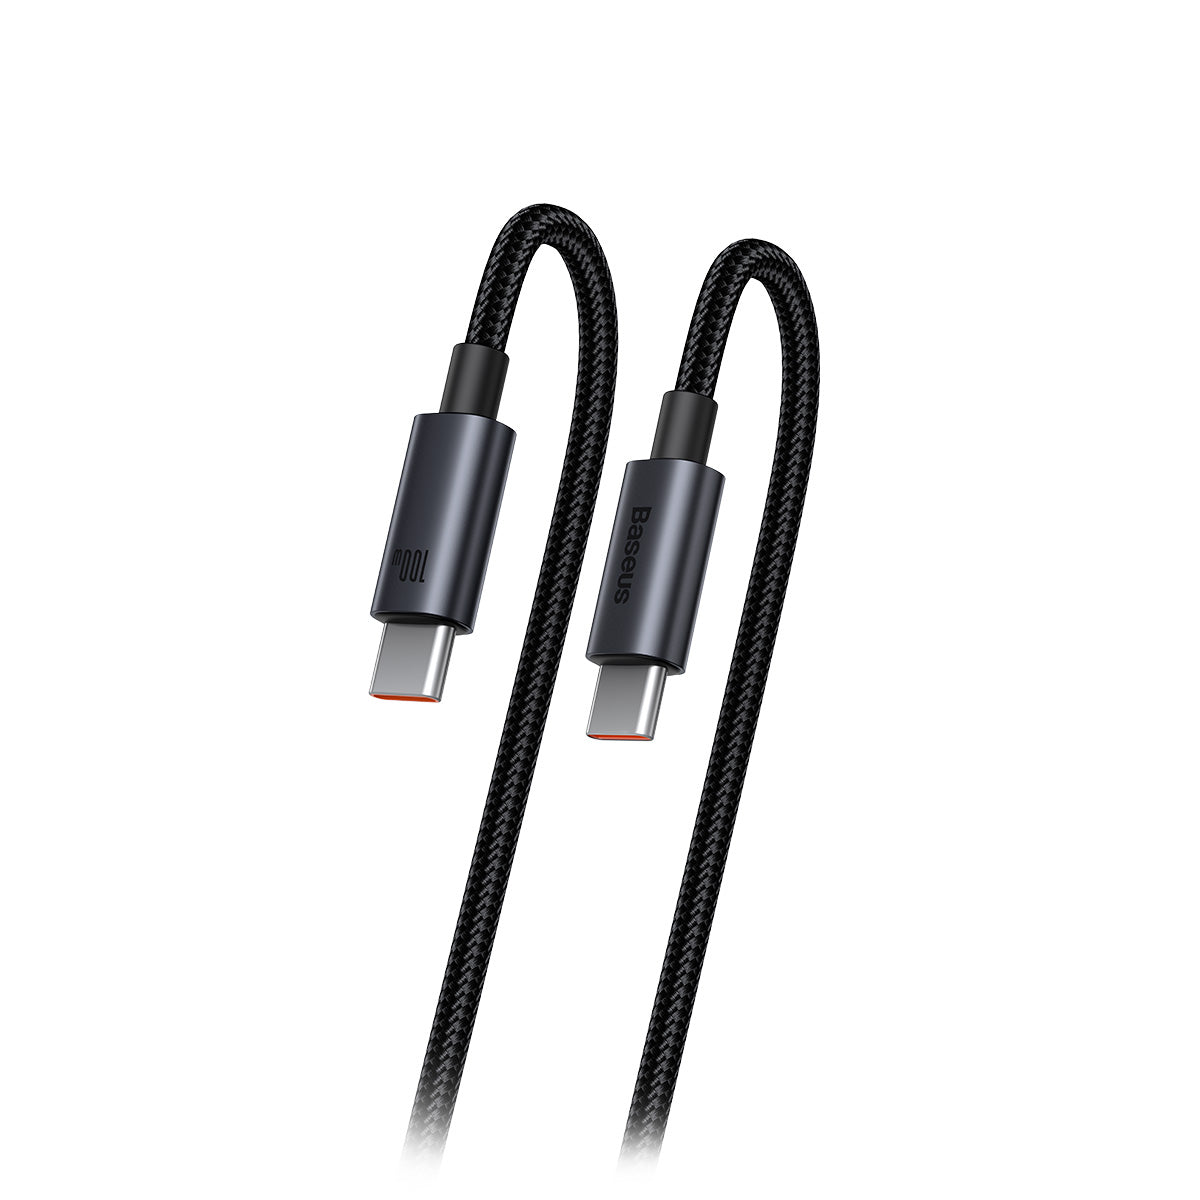 USB C to USB C Cable [3 ft] – Simply Carbon Fiber